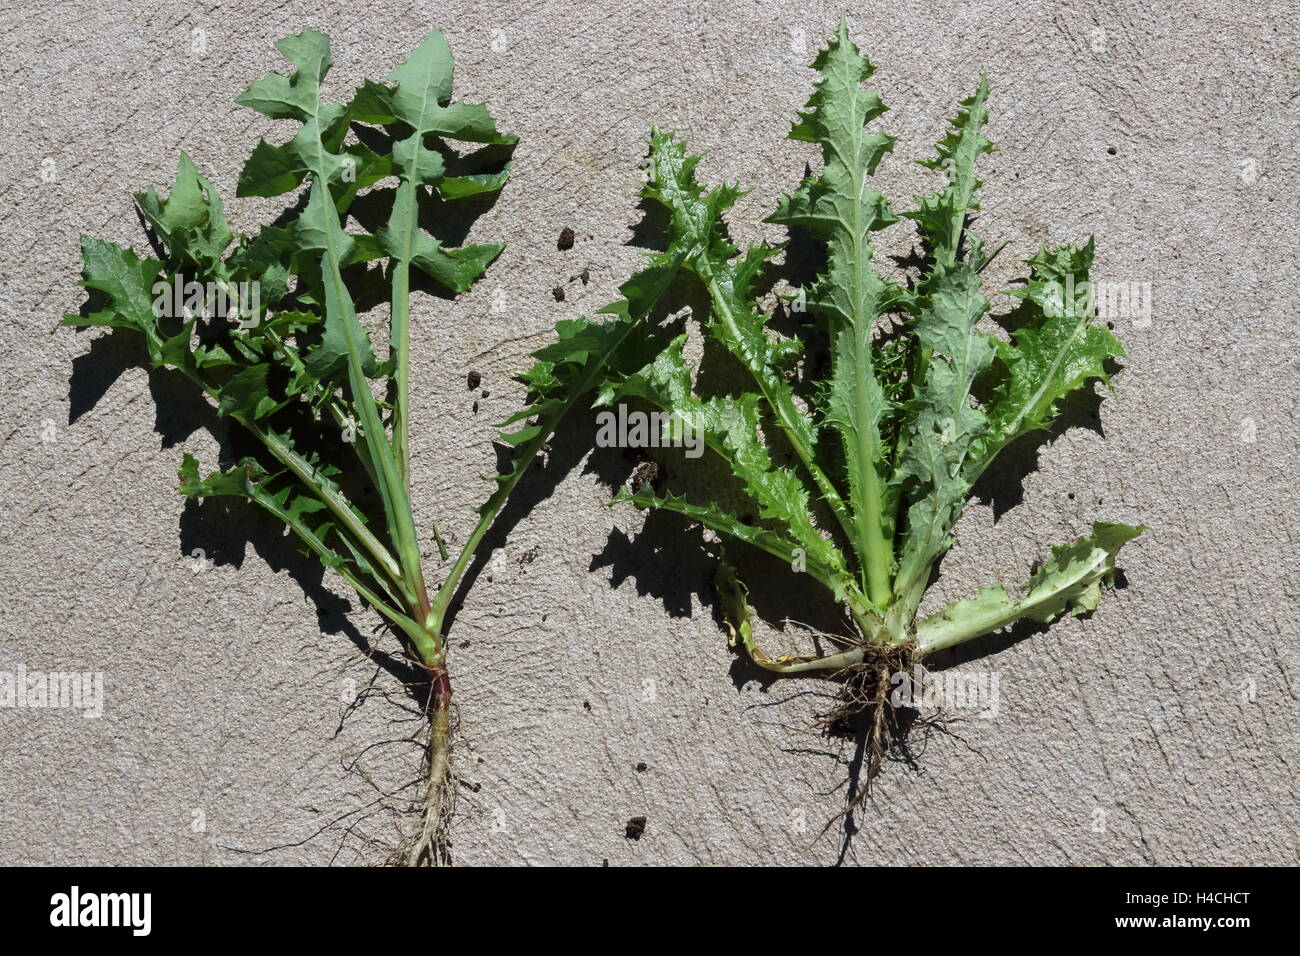 Stachelige oder grobe Sow Thistle - Sonchus Asper Vollpflanzen Stockfoto